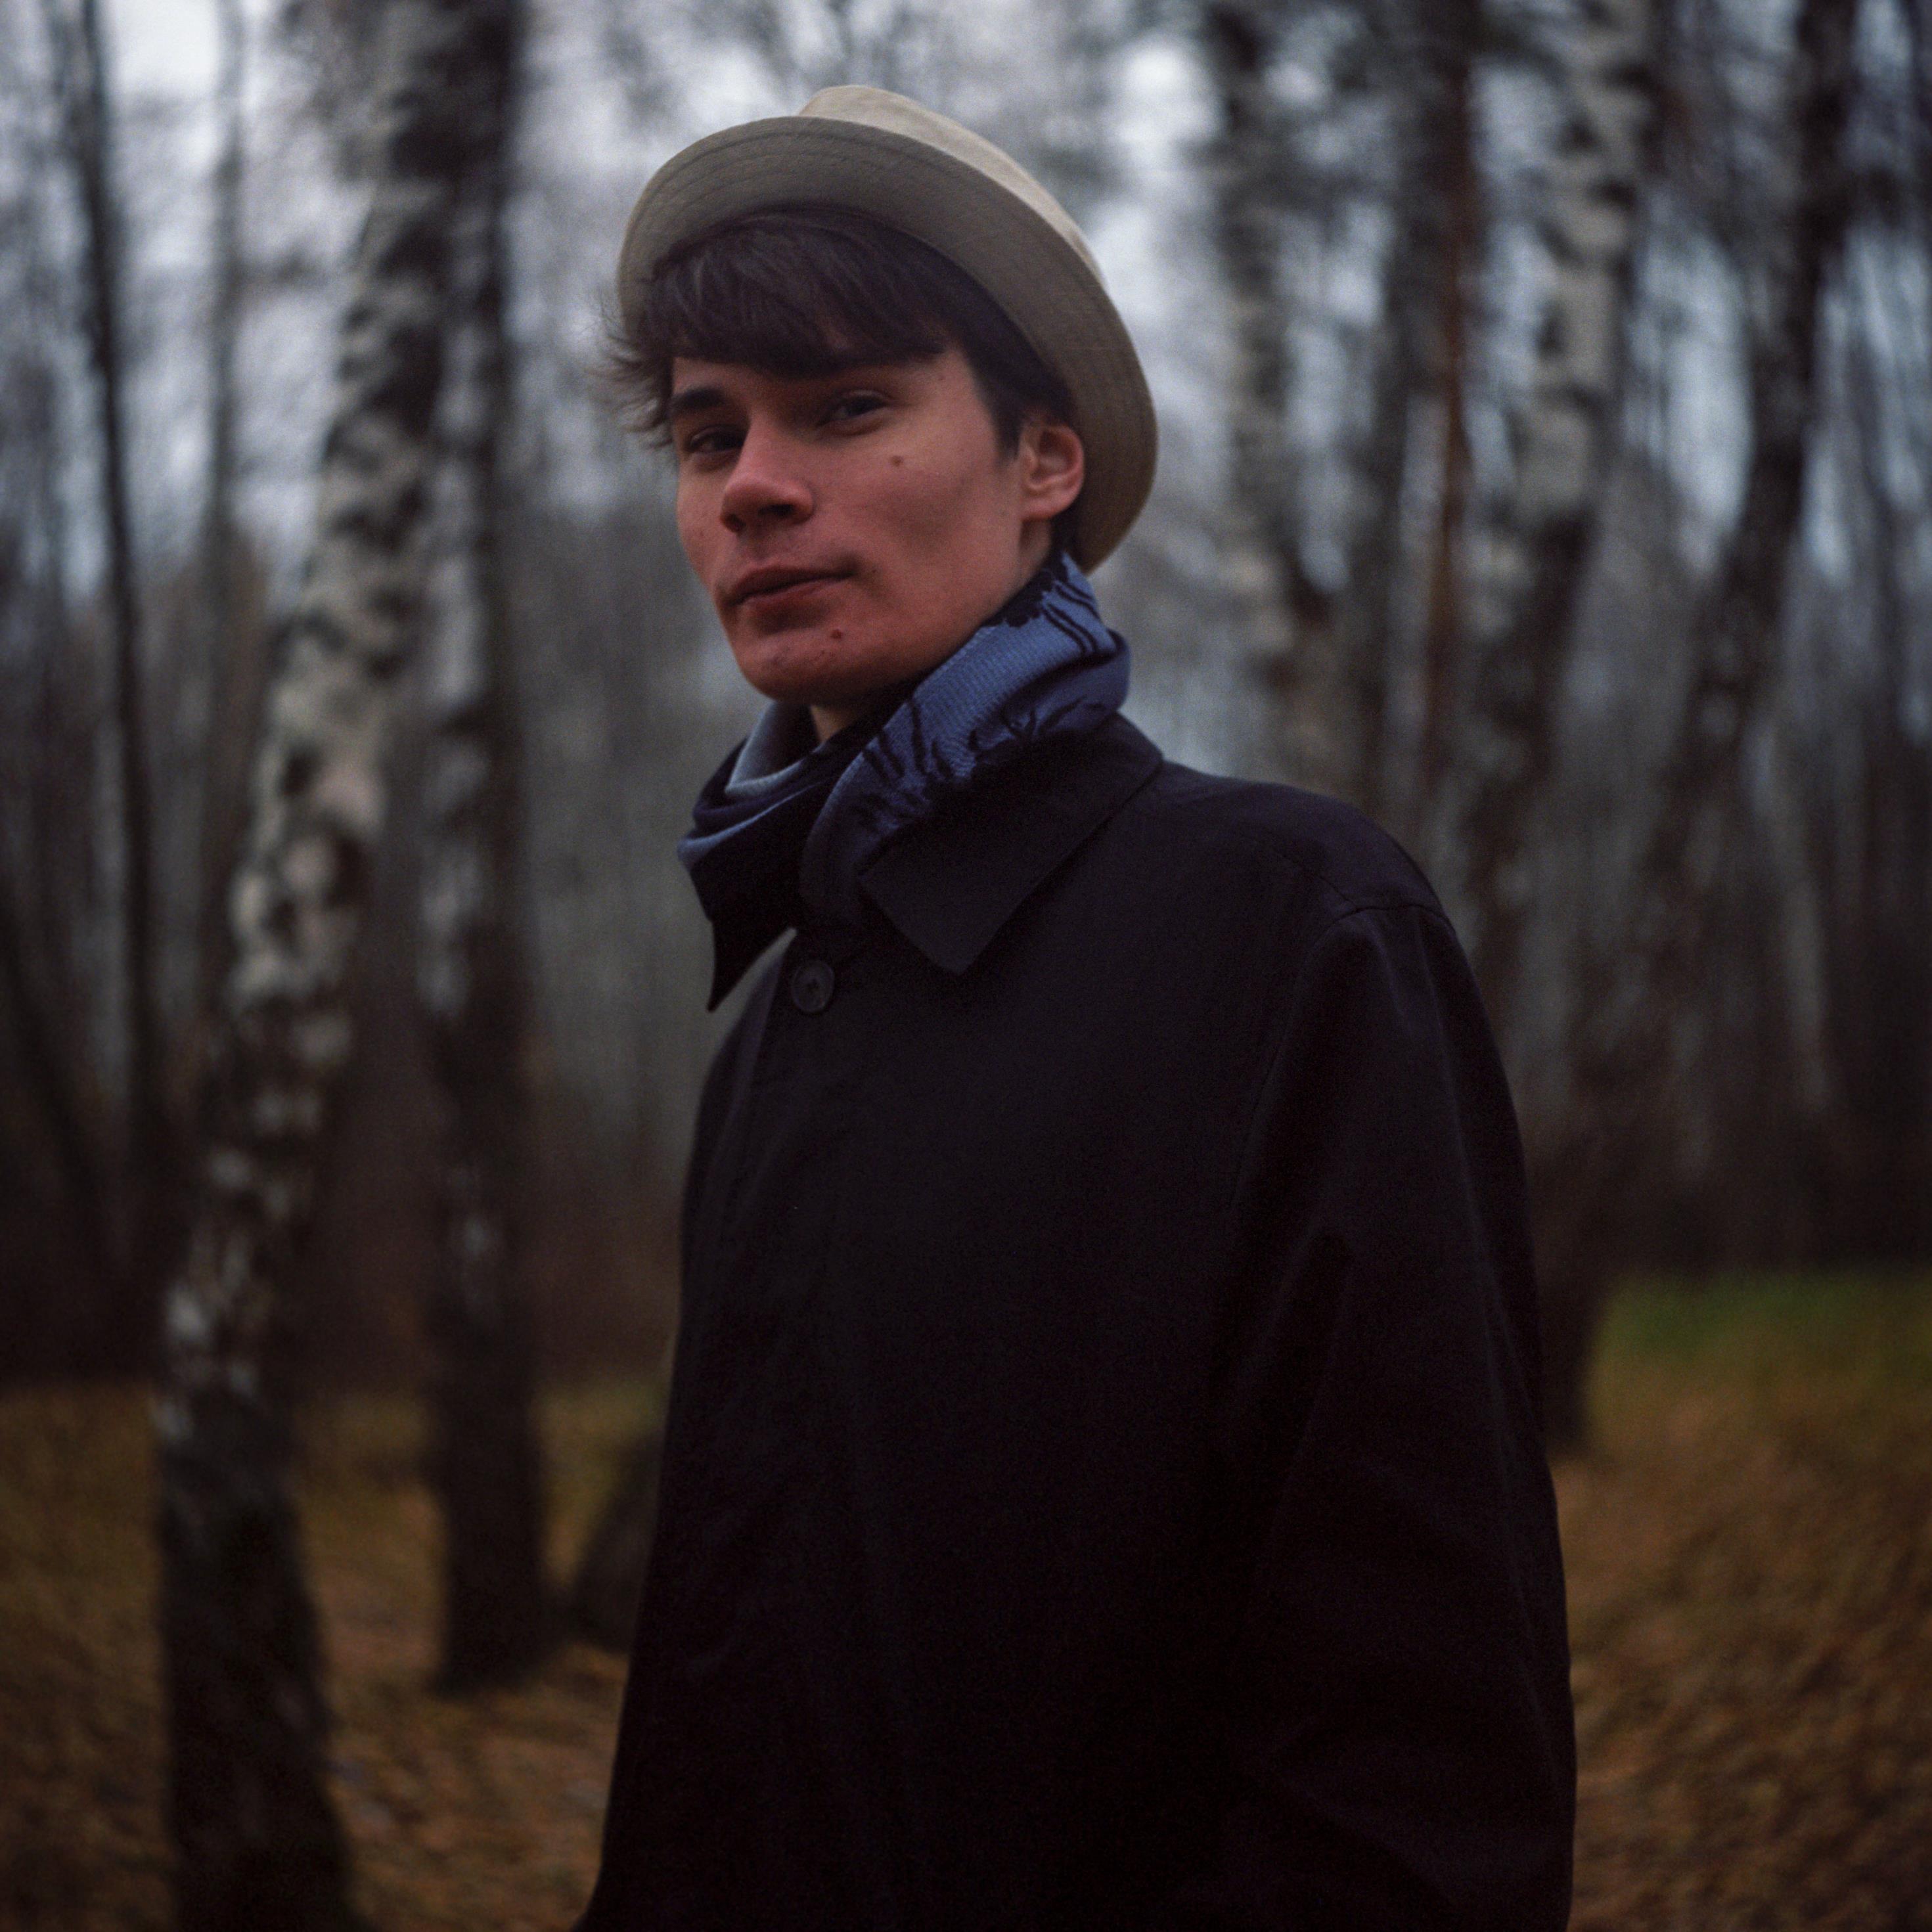 парень лес портрет шляпа плащ пальто фото берёзы 6x6 плёнка фотоплёнка средний форма ikoflex kodak porta 160, Иванов Юрий